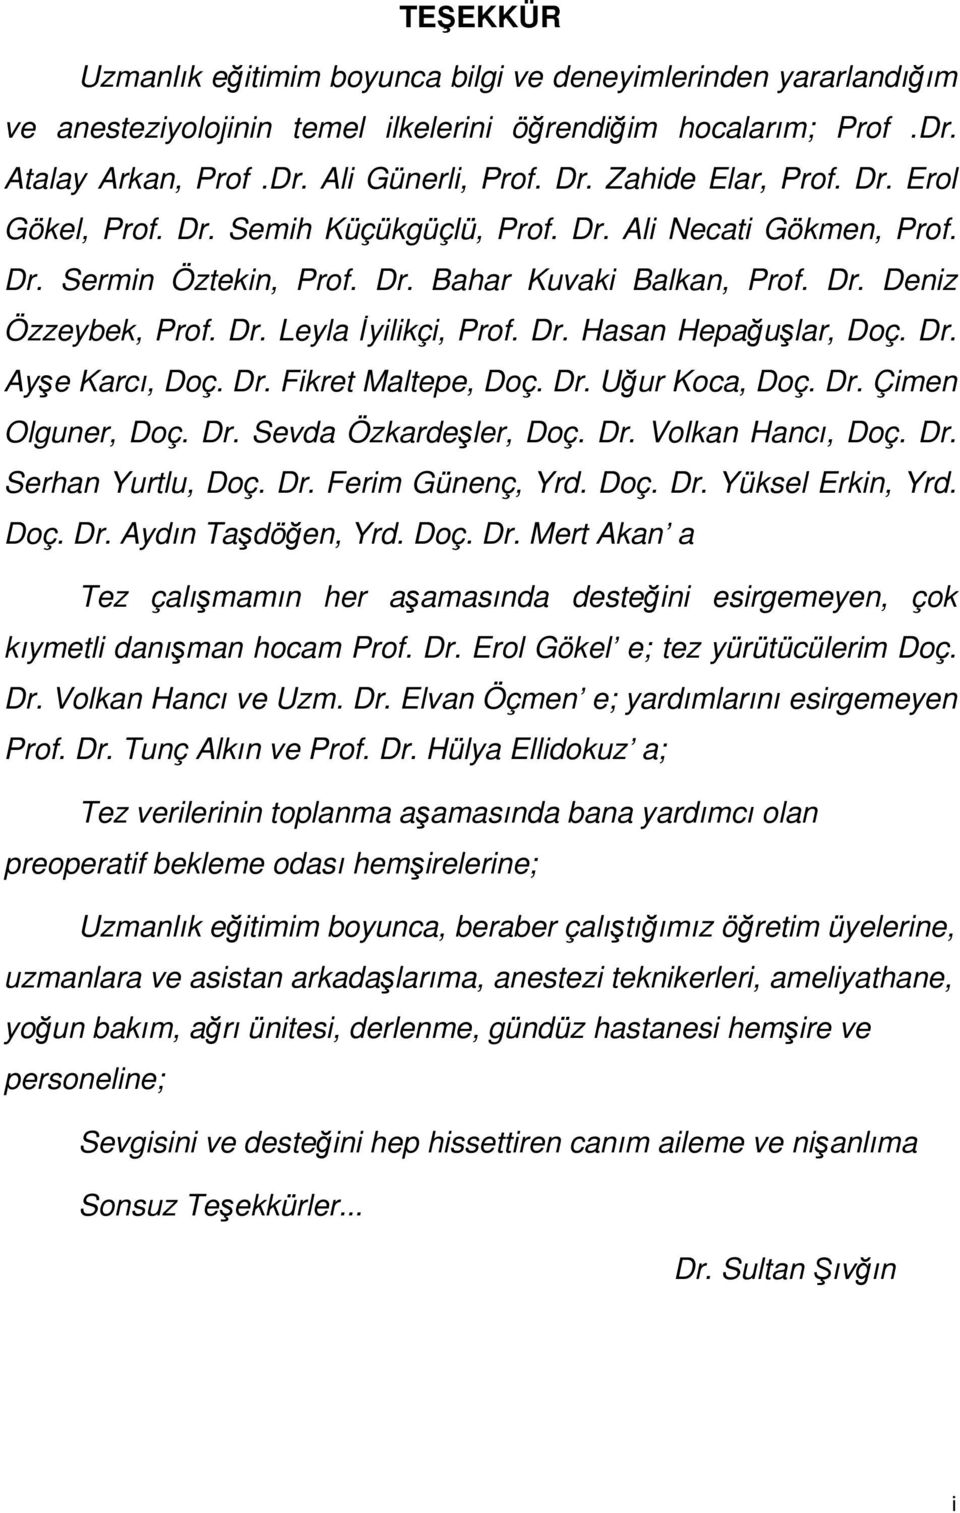 Dr. Hasan Hepağuşlar, Doç. Dr. Ayşe Karcı, Doç. Dr. Fikret Maltepe, Doç. Dr. Uğur Koca, Doç. Dr. Çimen Olguner, Doç. Dr. Sevda Özkardeşler, Doç. Dr. Volkan Hancı, Doç. Dr. Serhan Yurtlu, Doç. Dr. Ferim Günenç, Yrd.